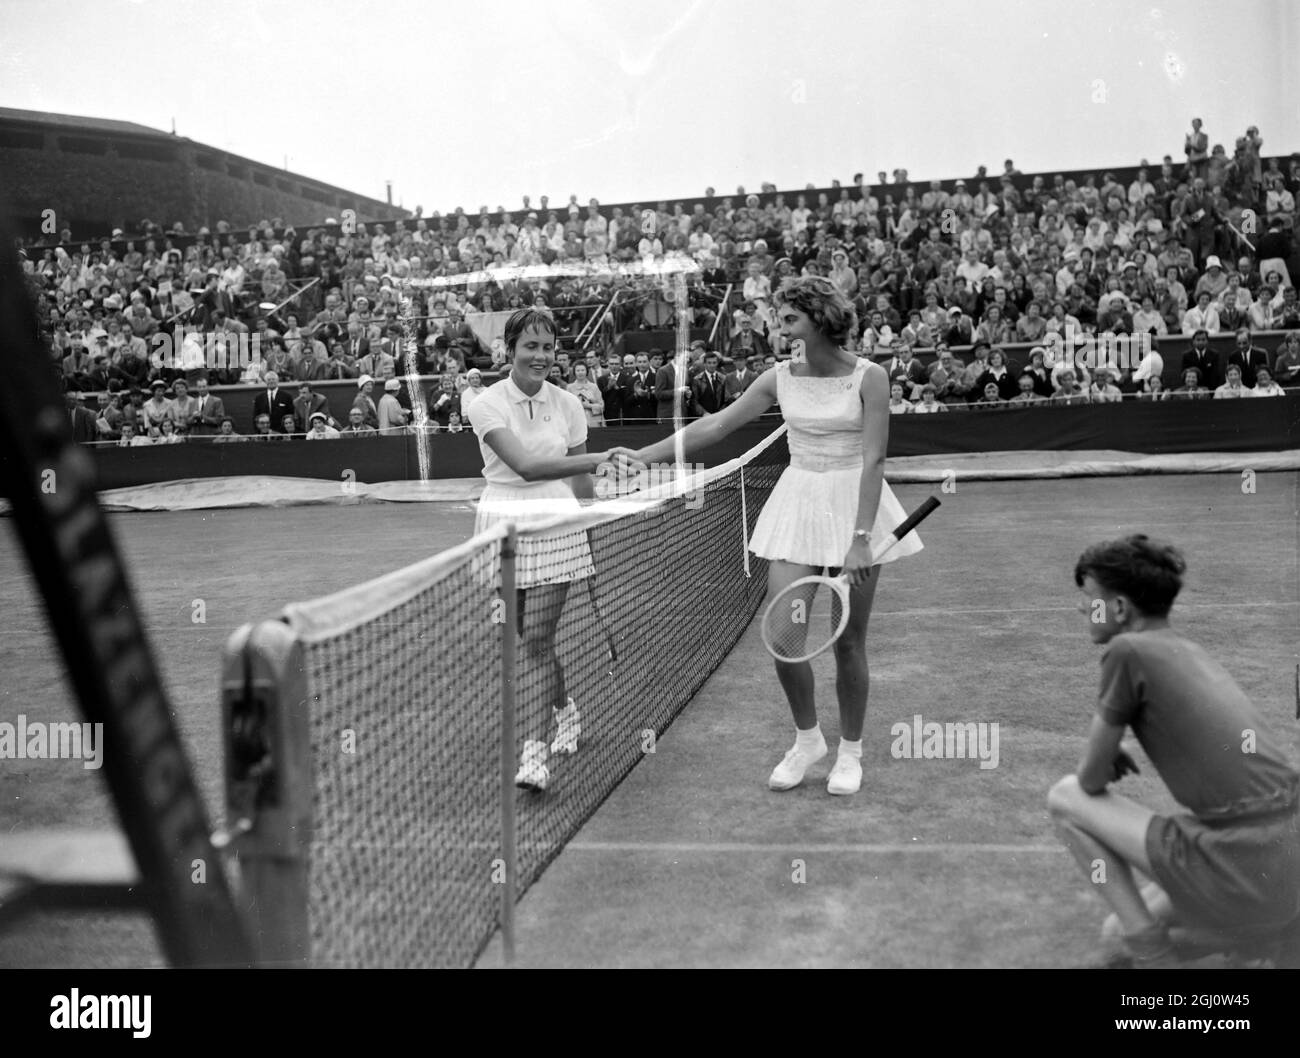 Hutchings Lynn Shakes After Match Tennis Wimbledon Championships Womens And Mens 24 June 1960 2GJ0W45 